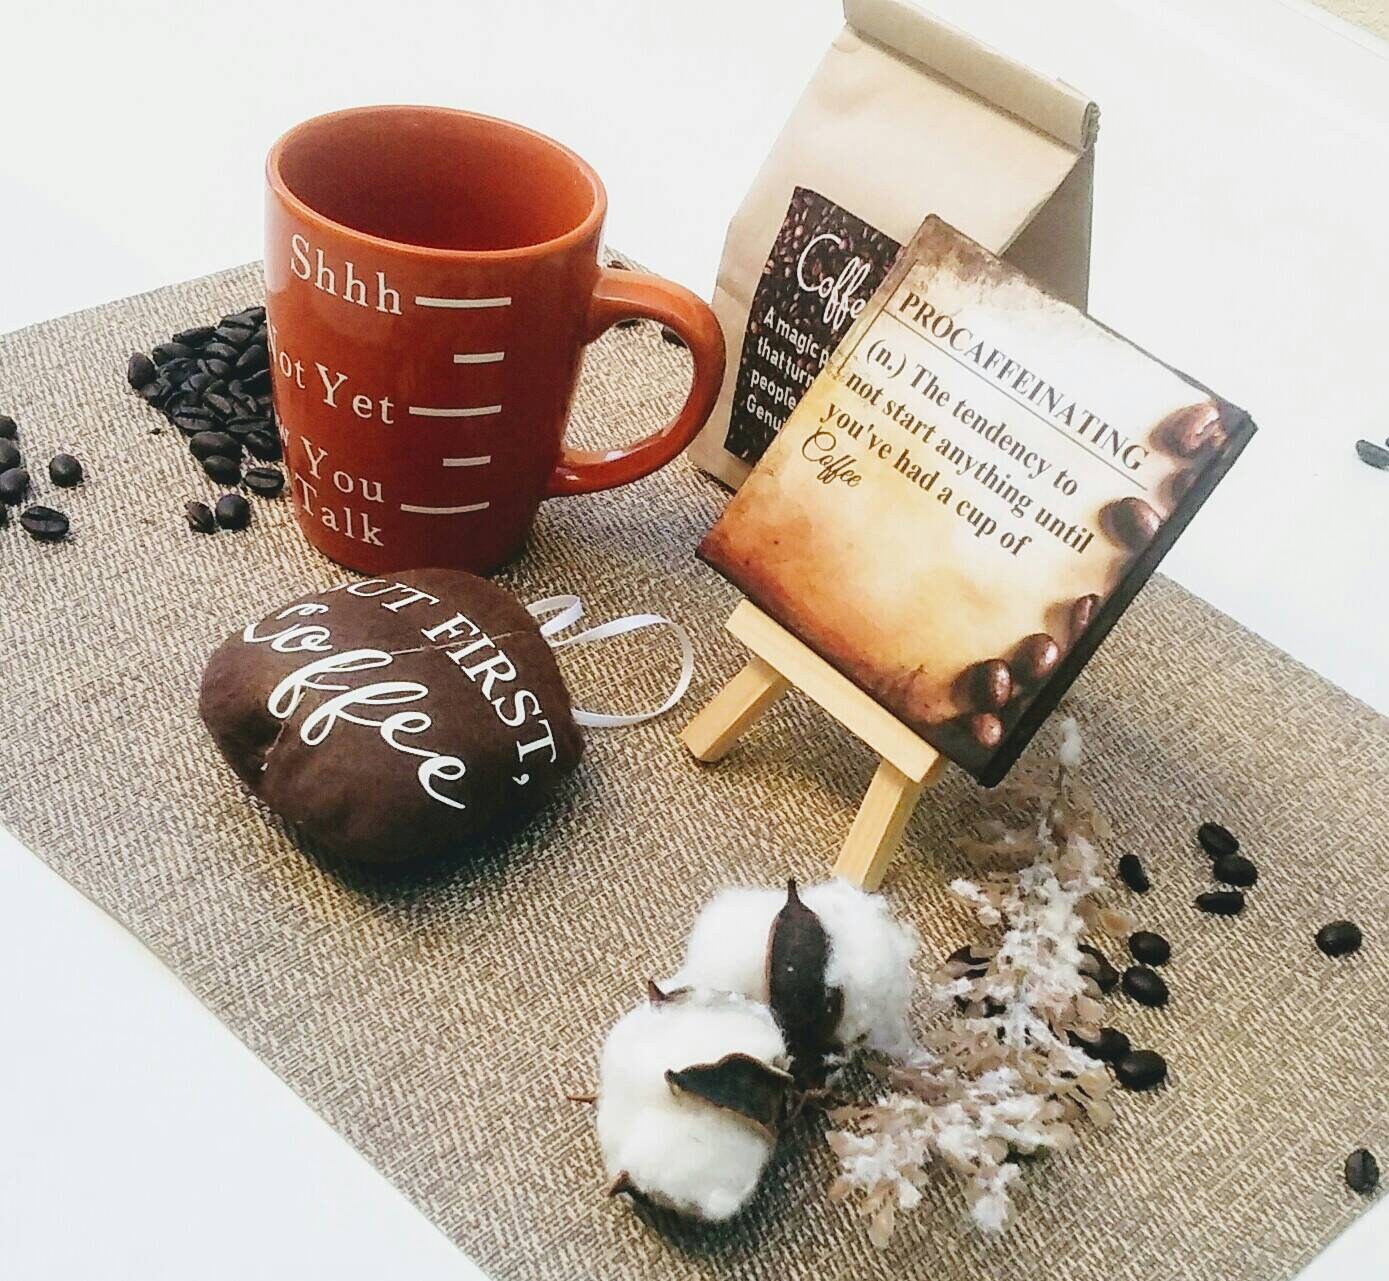 Fun Prescription Coffee Mug Gift Ideas  Novelty Gifts for Coffee Lovers –  Busybee Creates